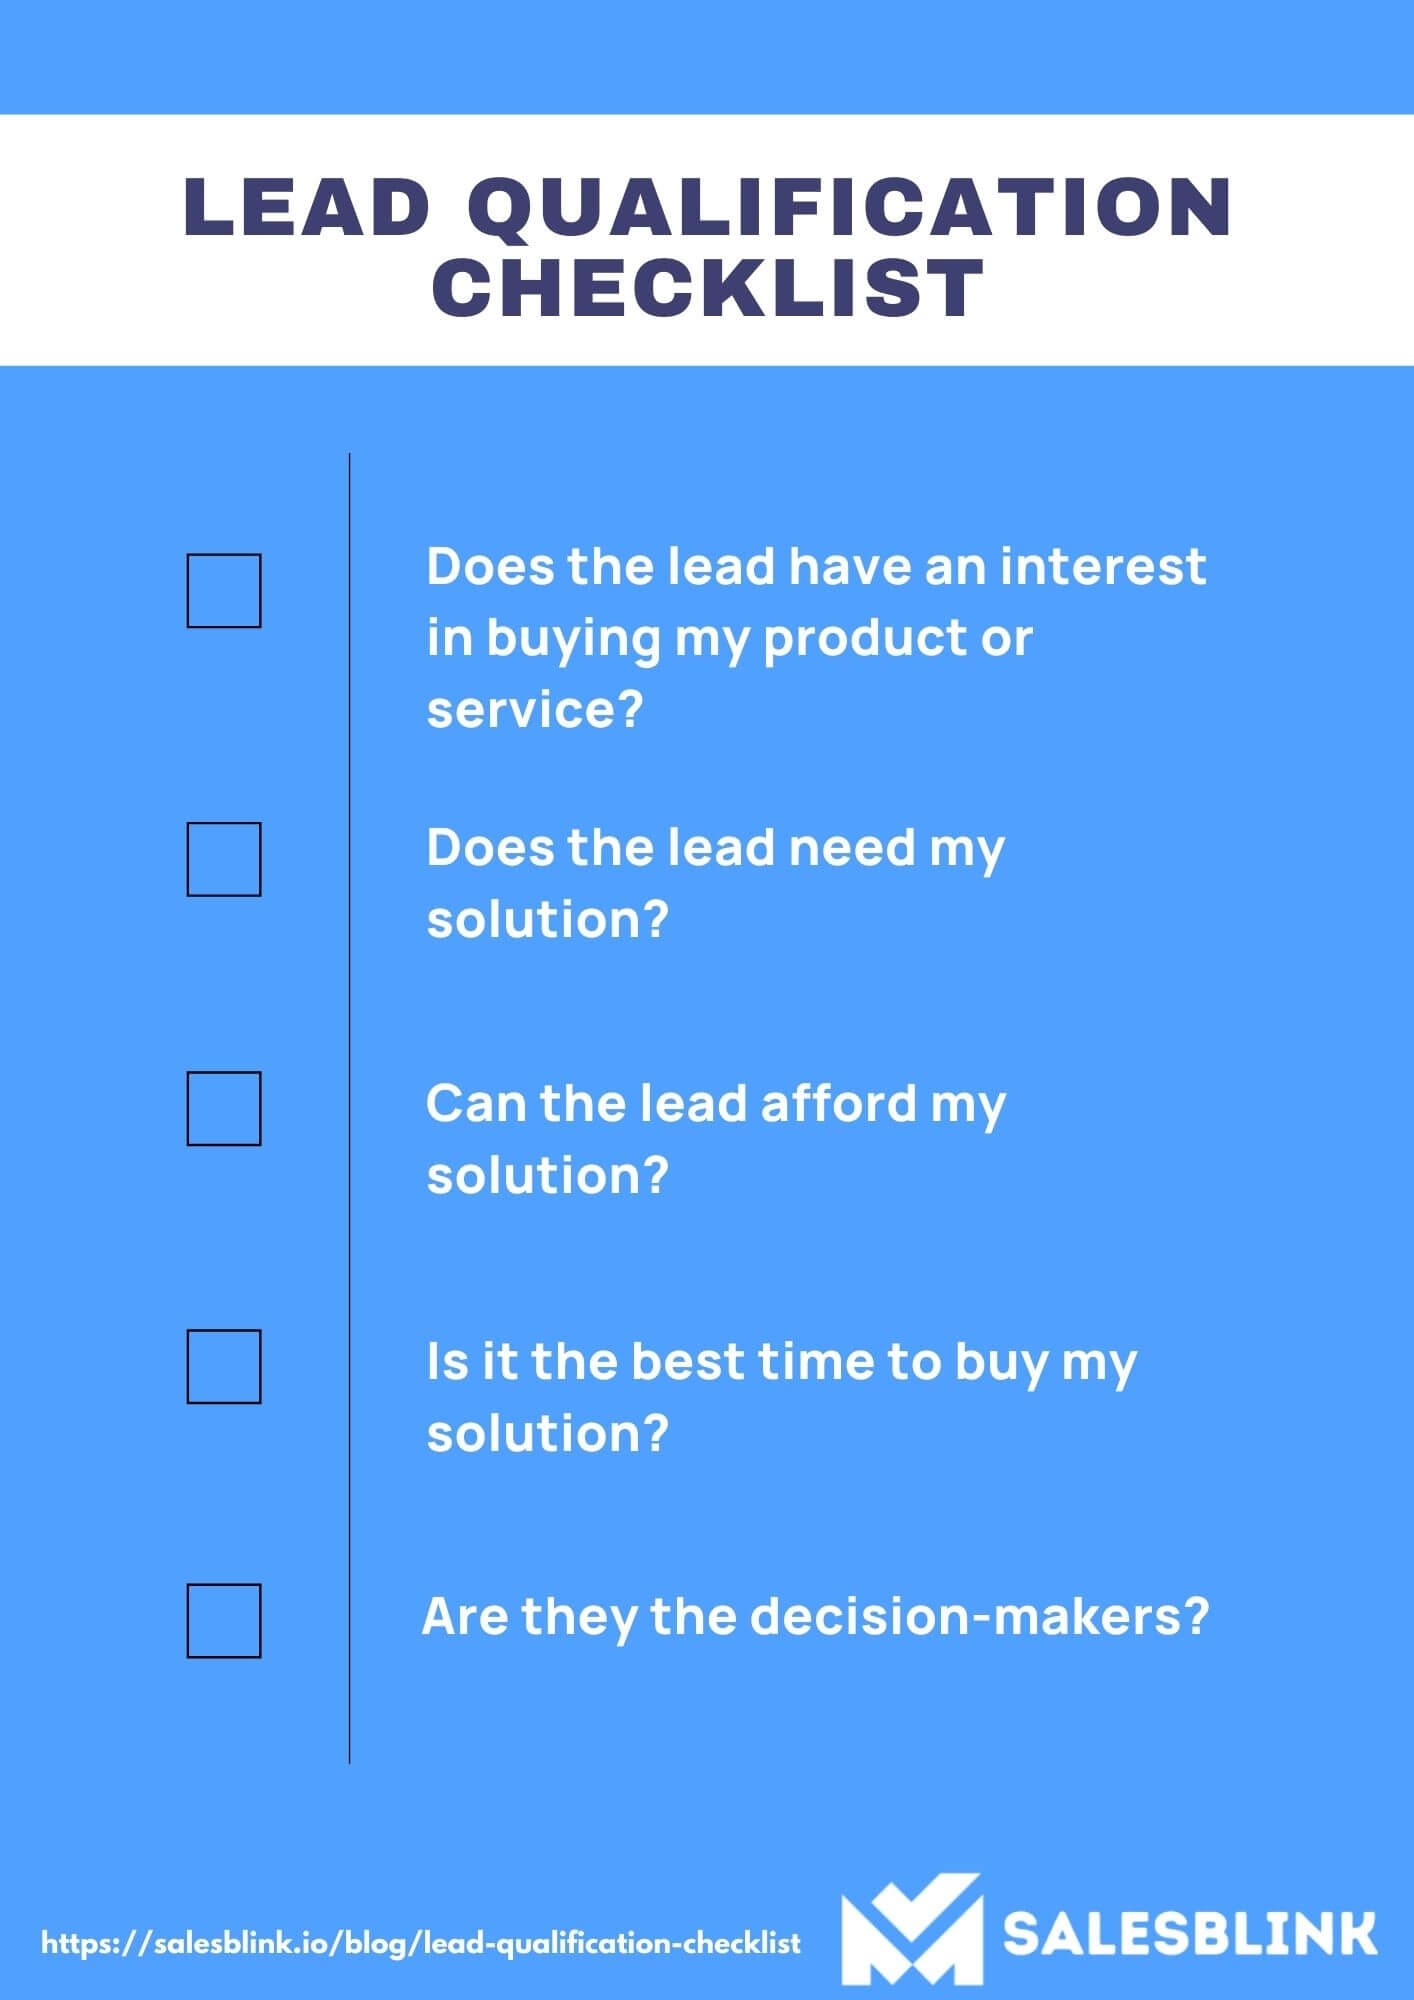 Lead qualification checklist 